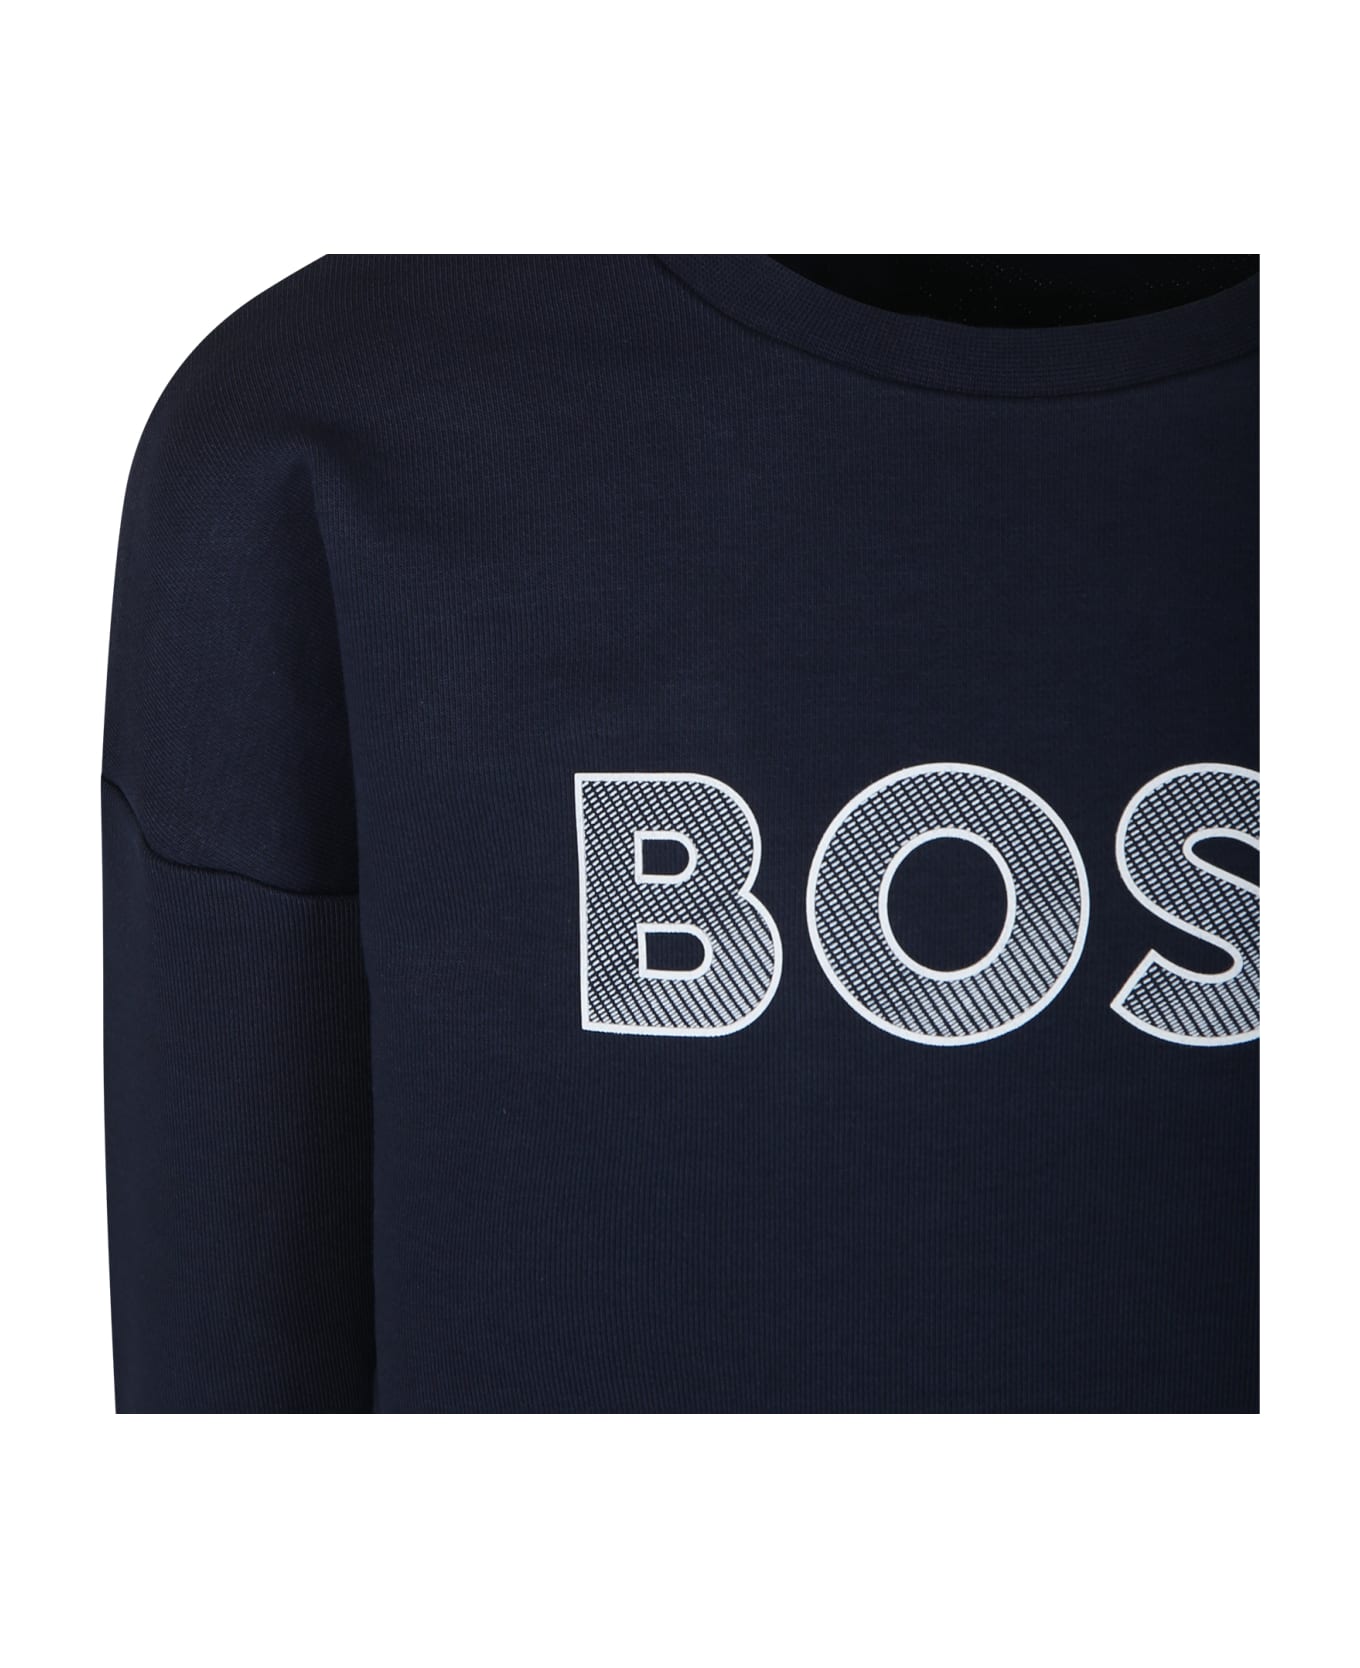 Hugo Boss Blue Sweatshirt For Boy With Logo - Blue